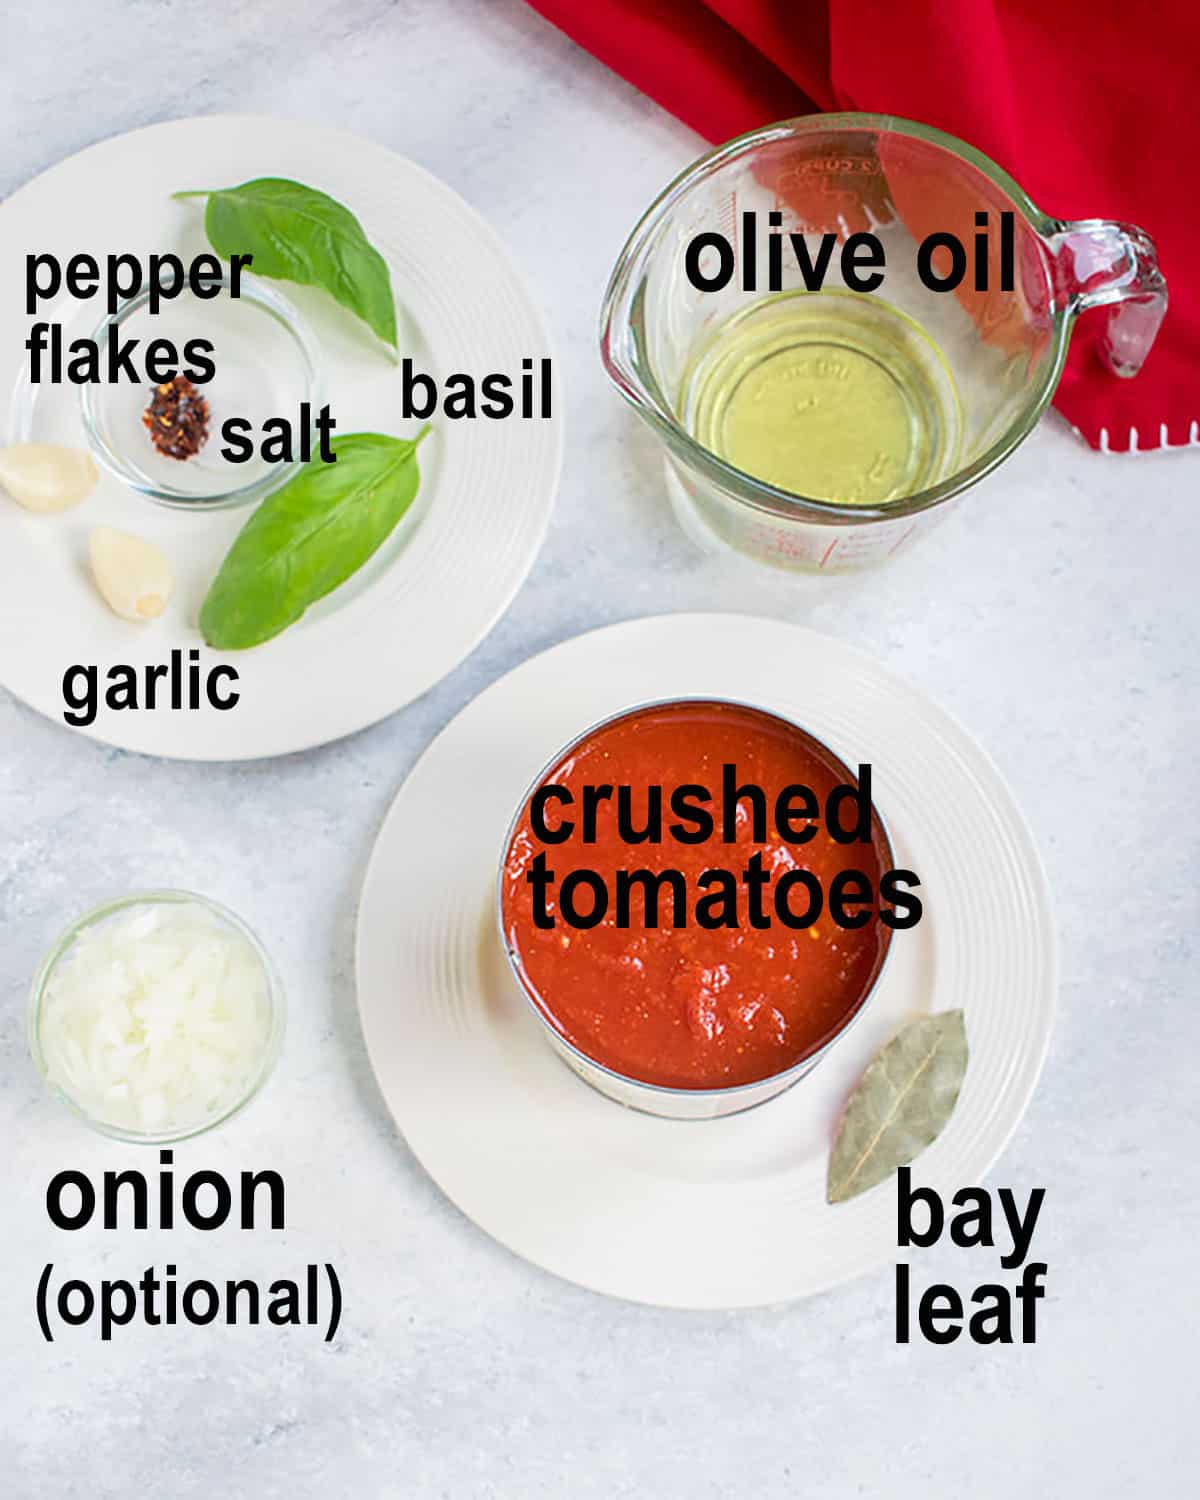 oil, can of crushed tomatoes, bay leaf, onion, basil, garlic, seasonings